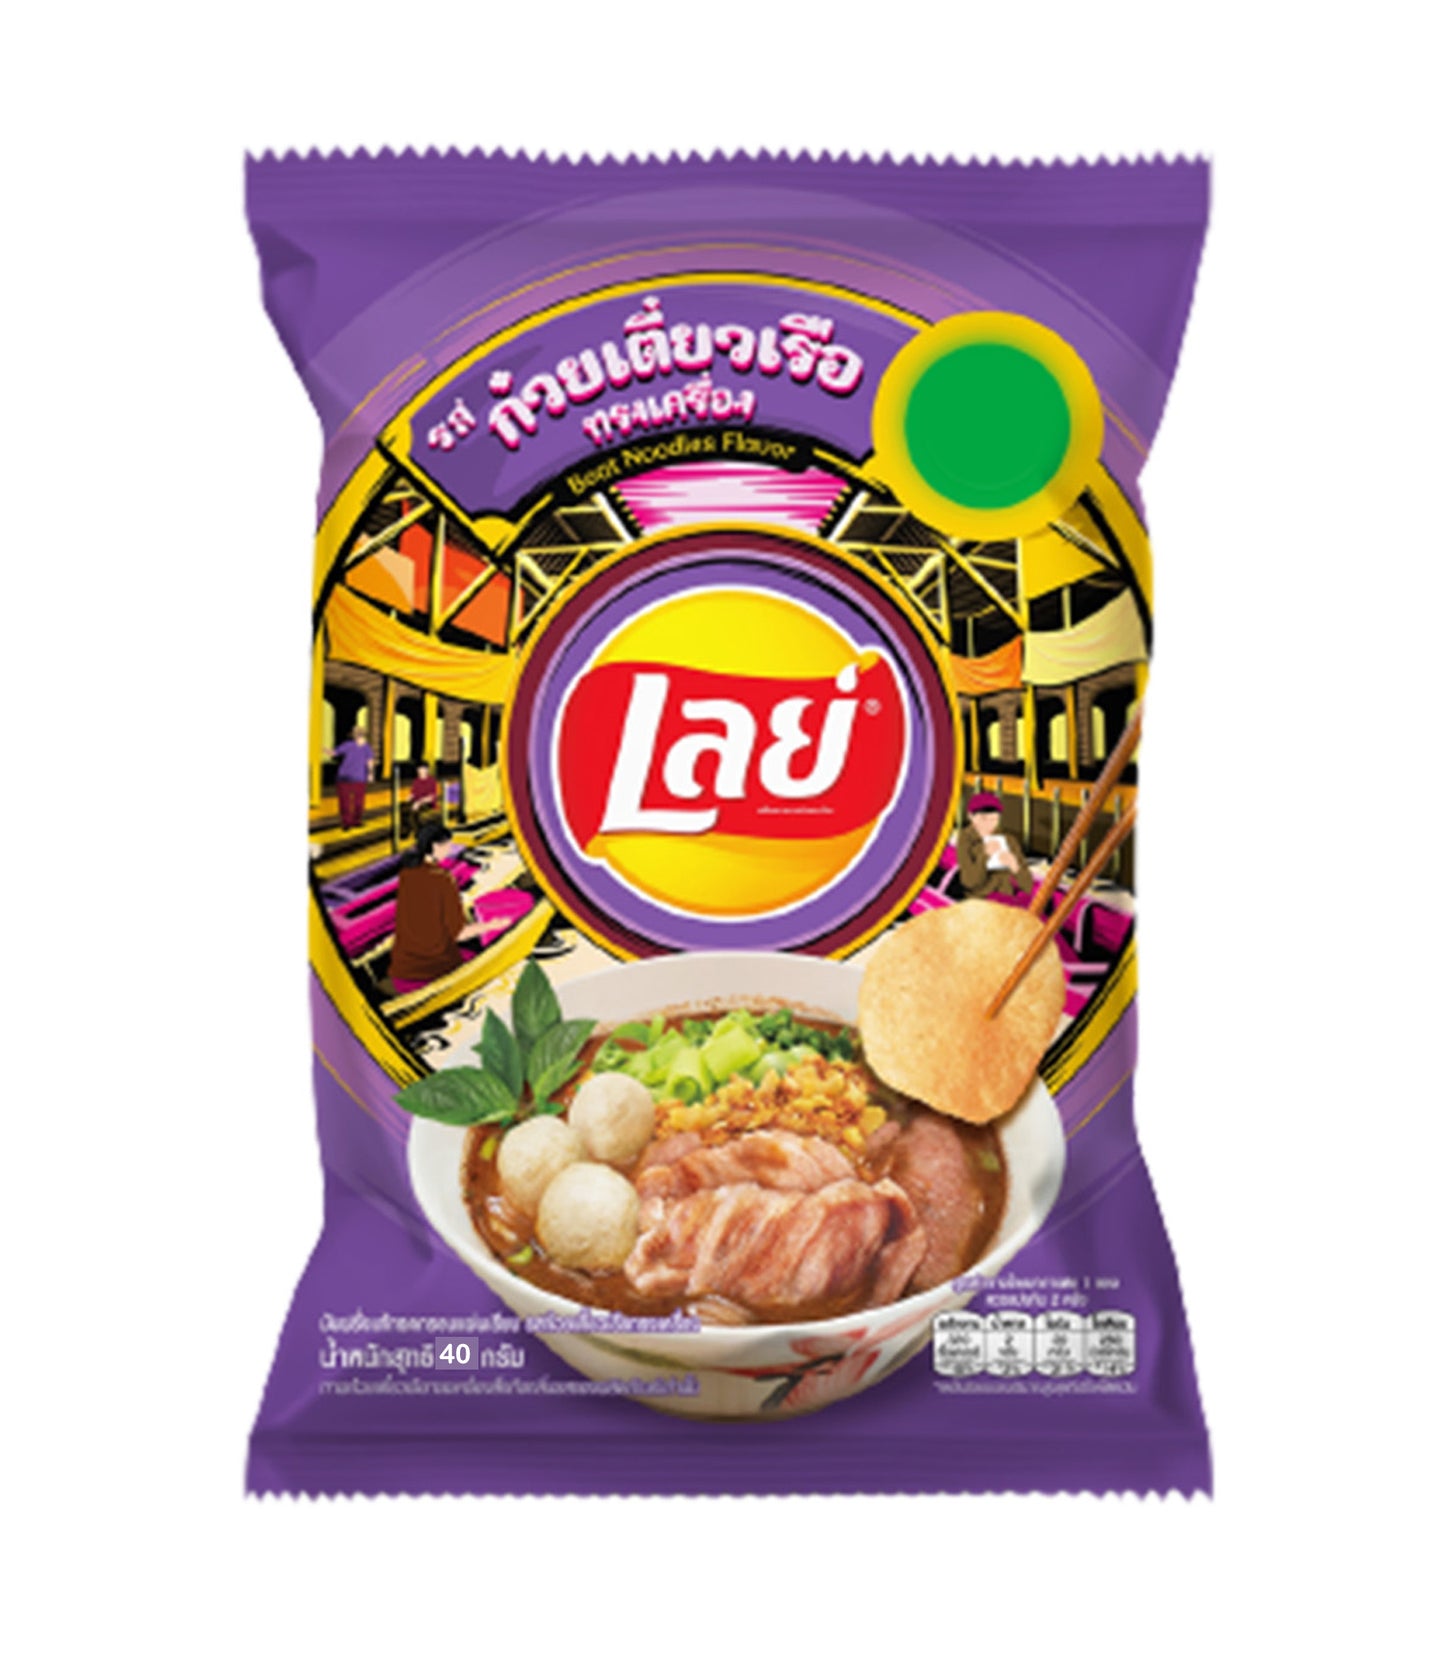 Lay’s – Potato Chips (Boat Noodles Flavor) 40g